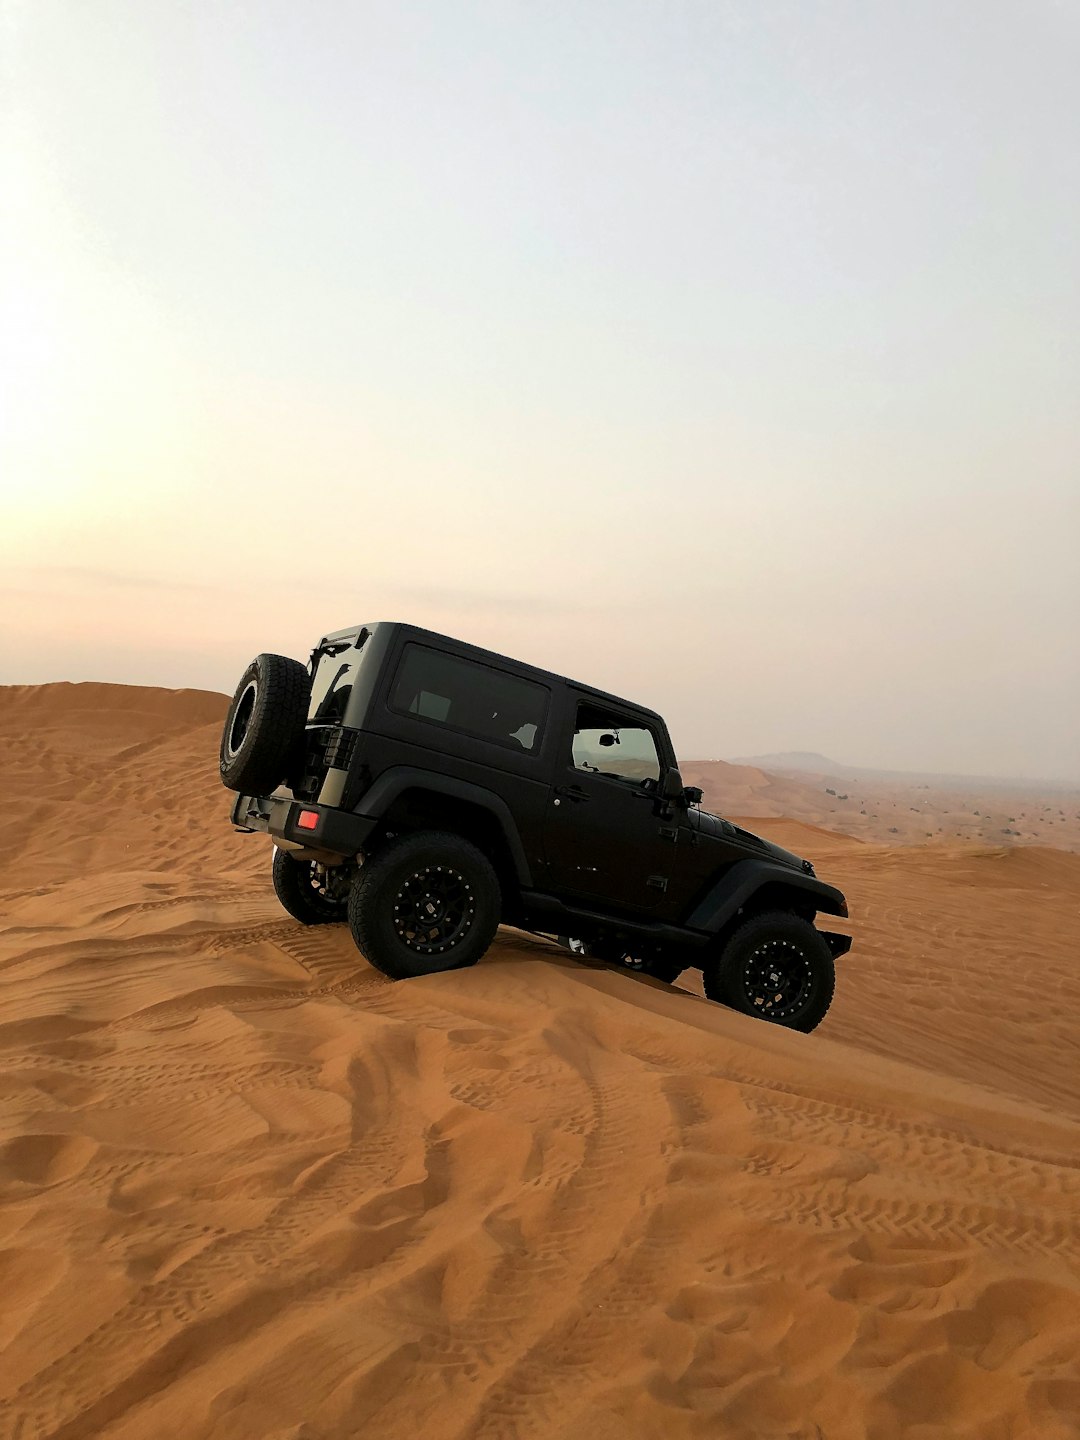 Off-roading photo spot Sharjah - United Arab Emirates Hatta